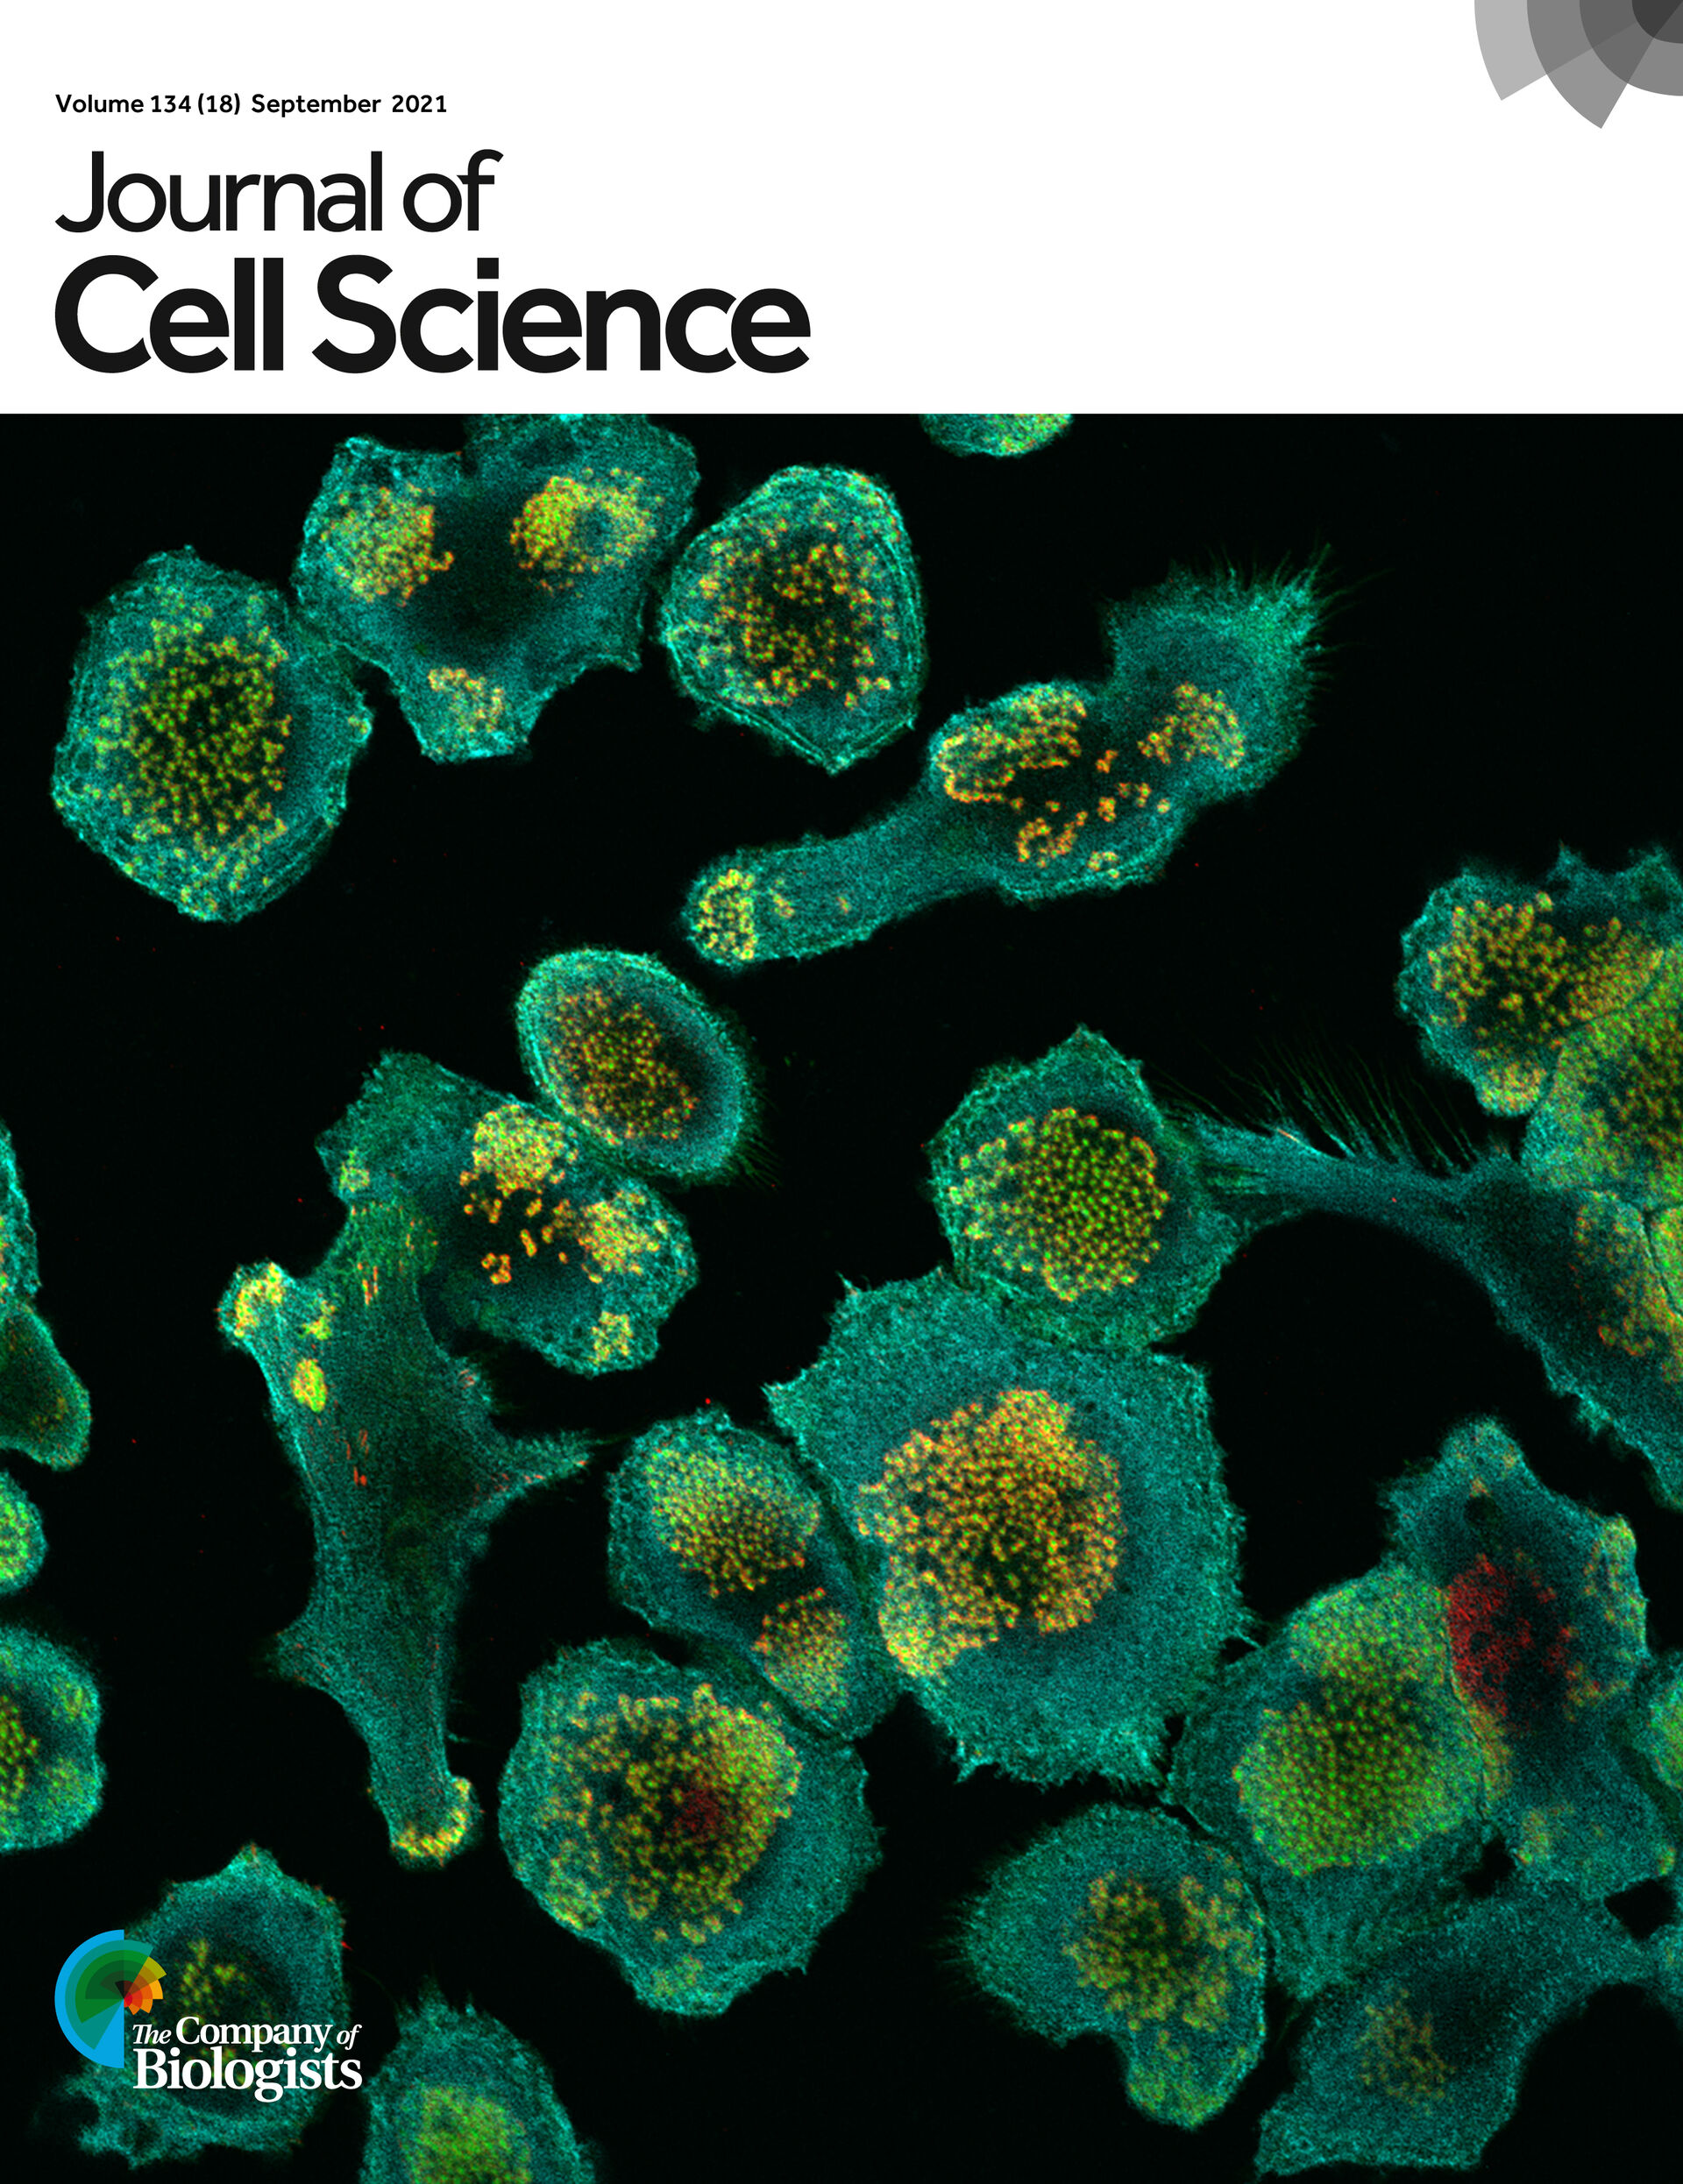 Cover of Journal of Cell Science by Vestre K. et al. (Volume 134, Issue 18 September 2021) 